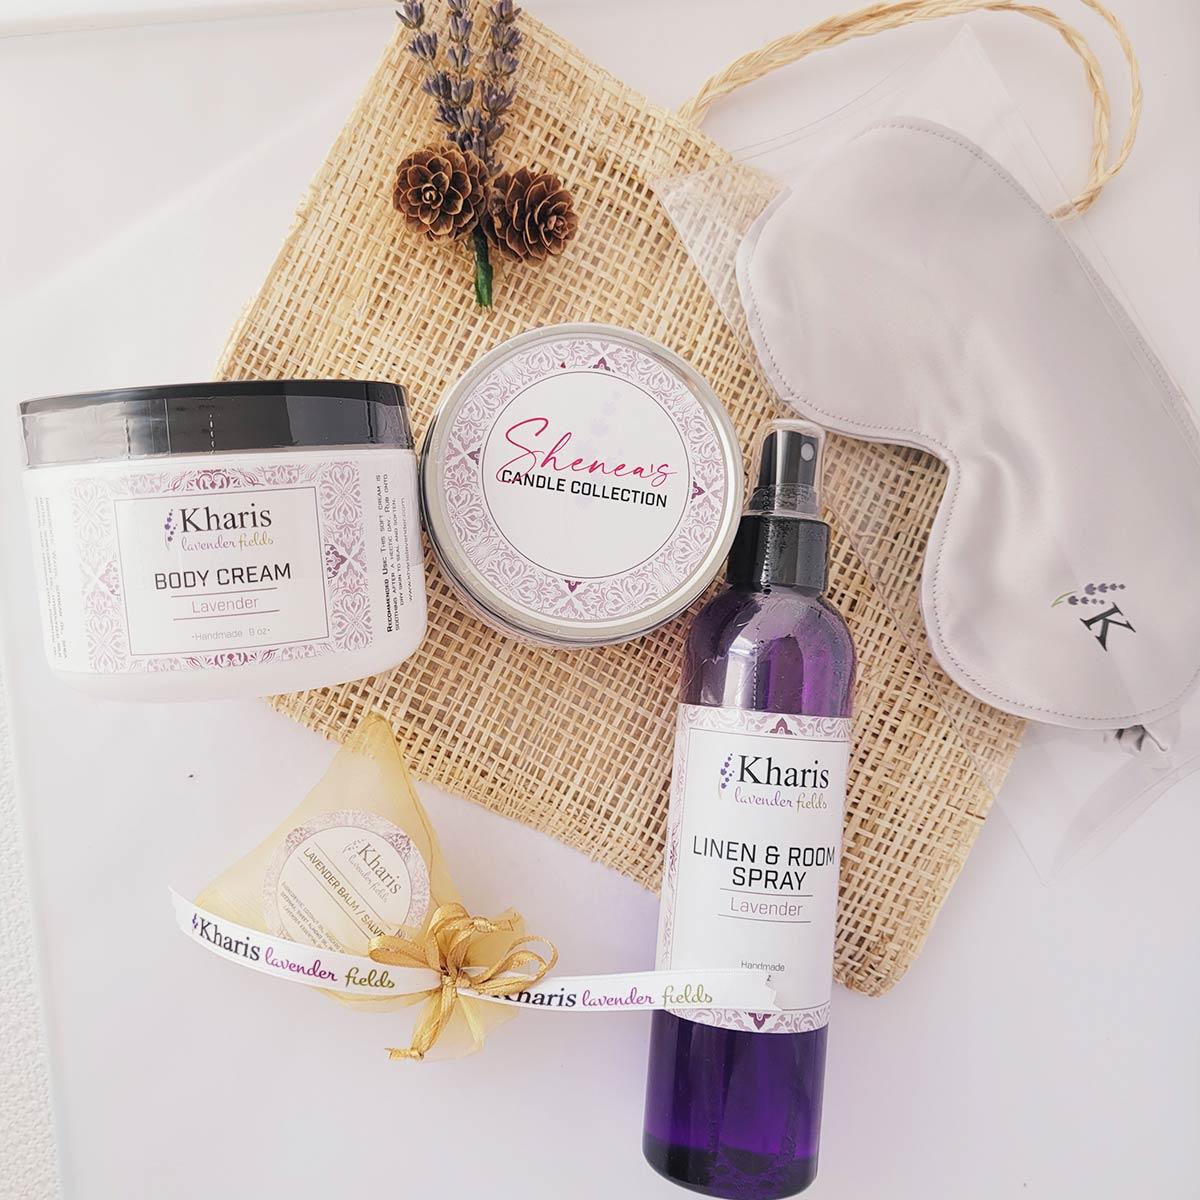 Self-Care with Lavender / Spa-at-Home Gift Set - Kharislavender